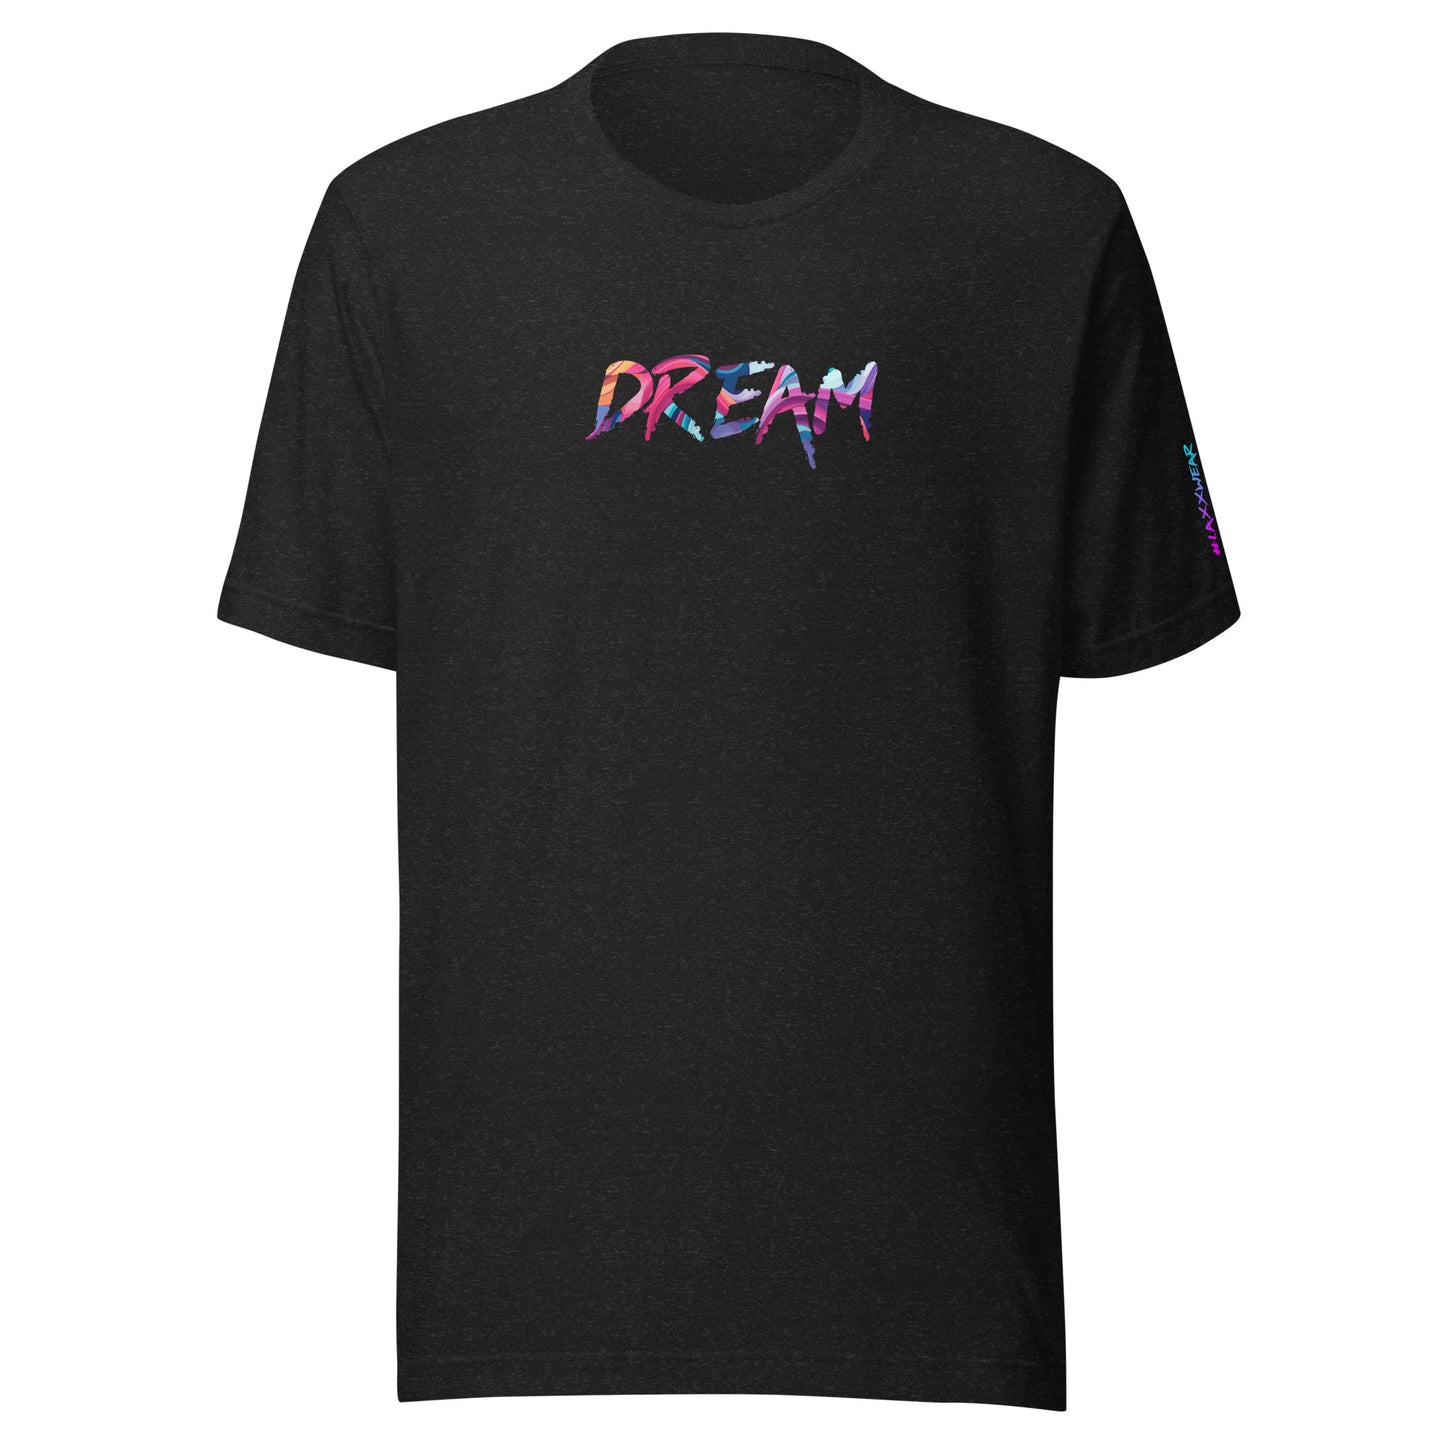 "Words of Encouragement" T-Shirt - Dream Q323